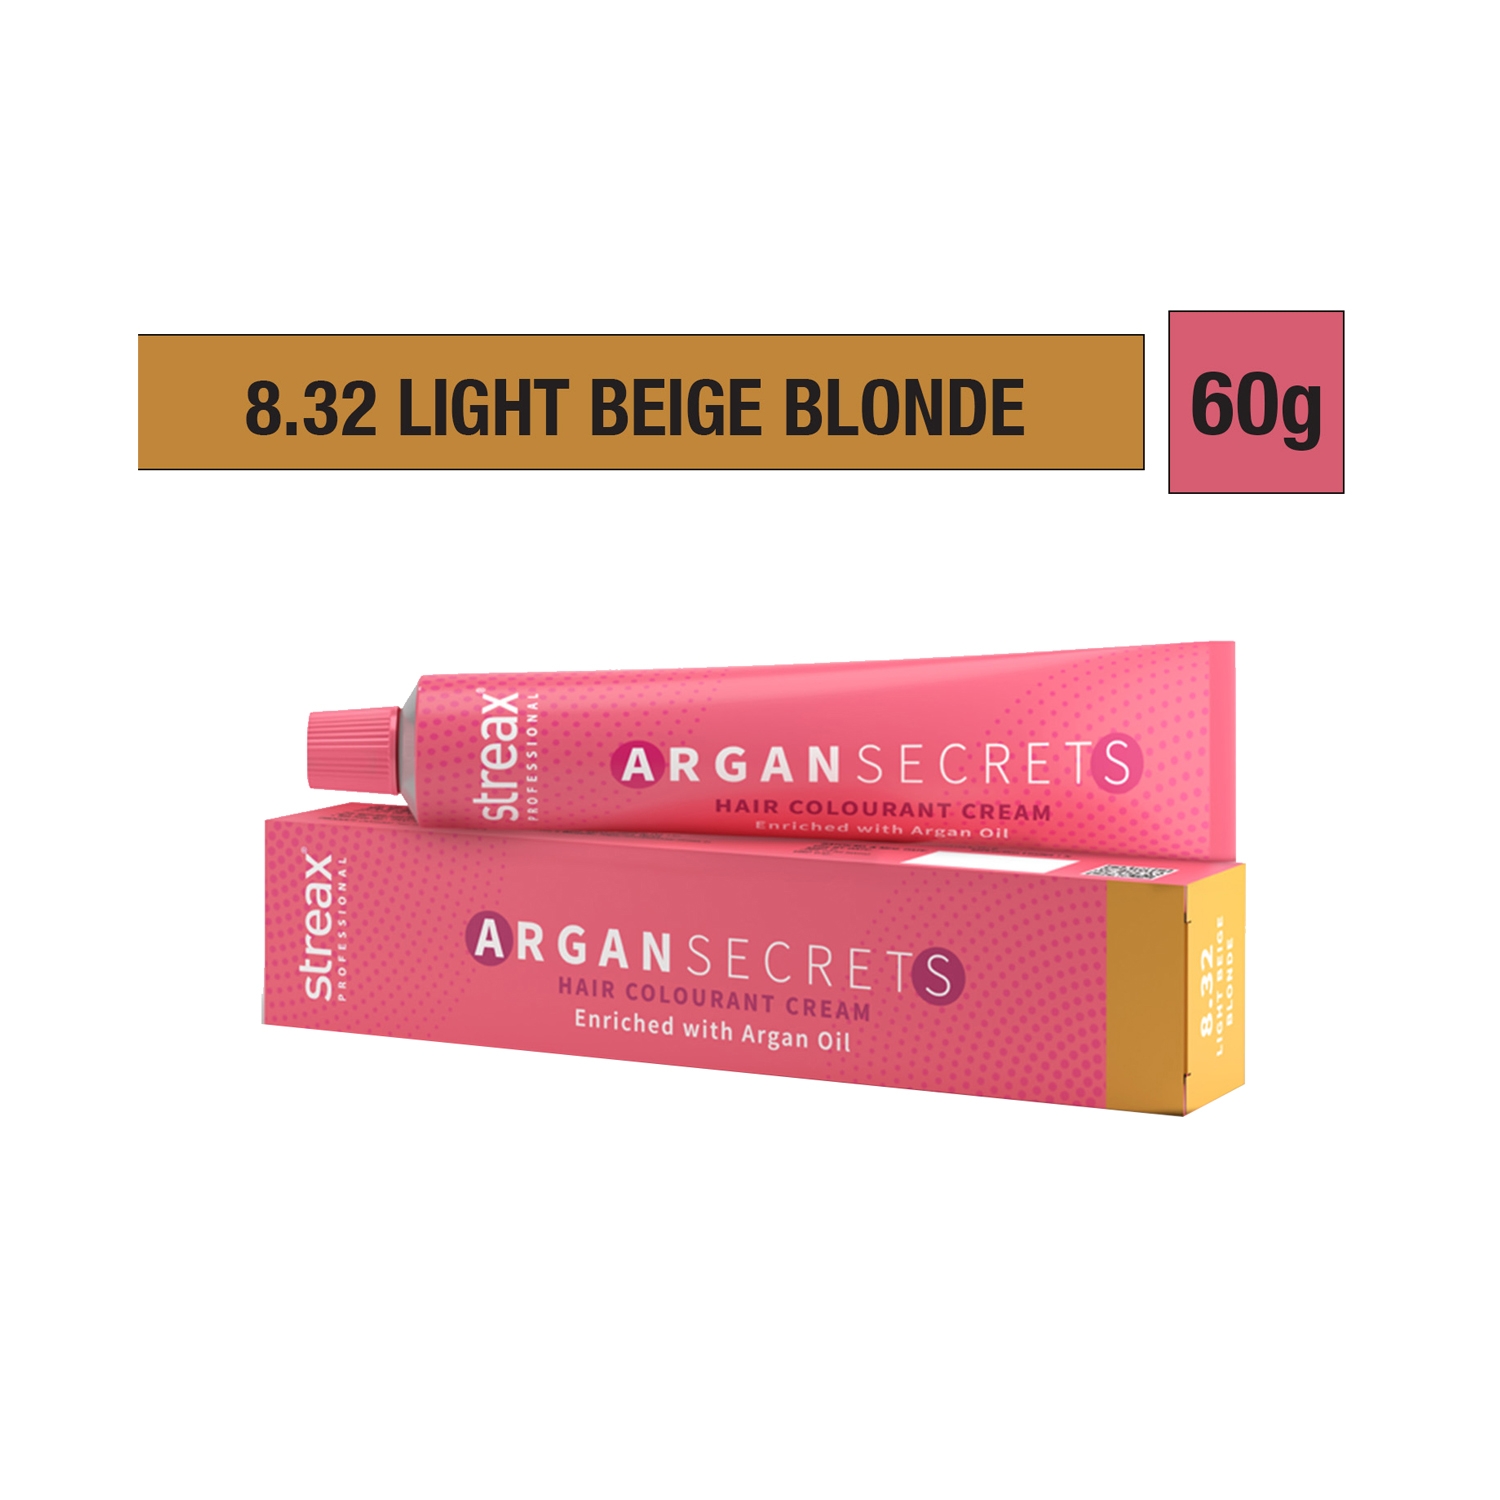 Streax Professional Argan Secrets Hair Colorant Cream - 8.32 Light Beige Blonde (60g)